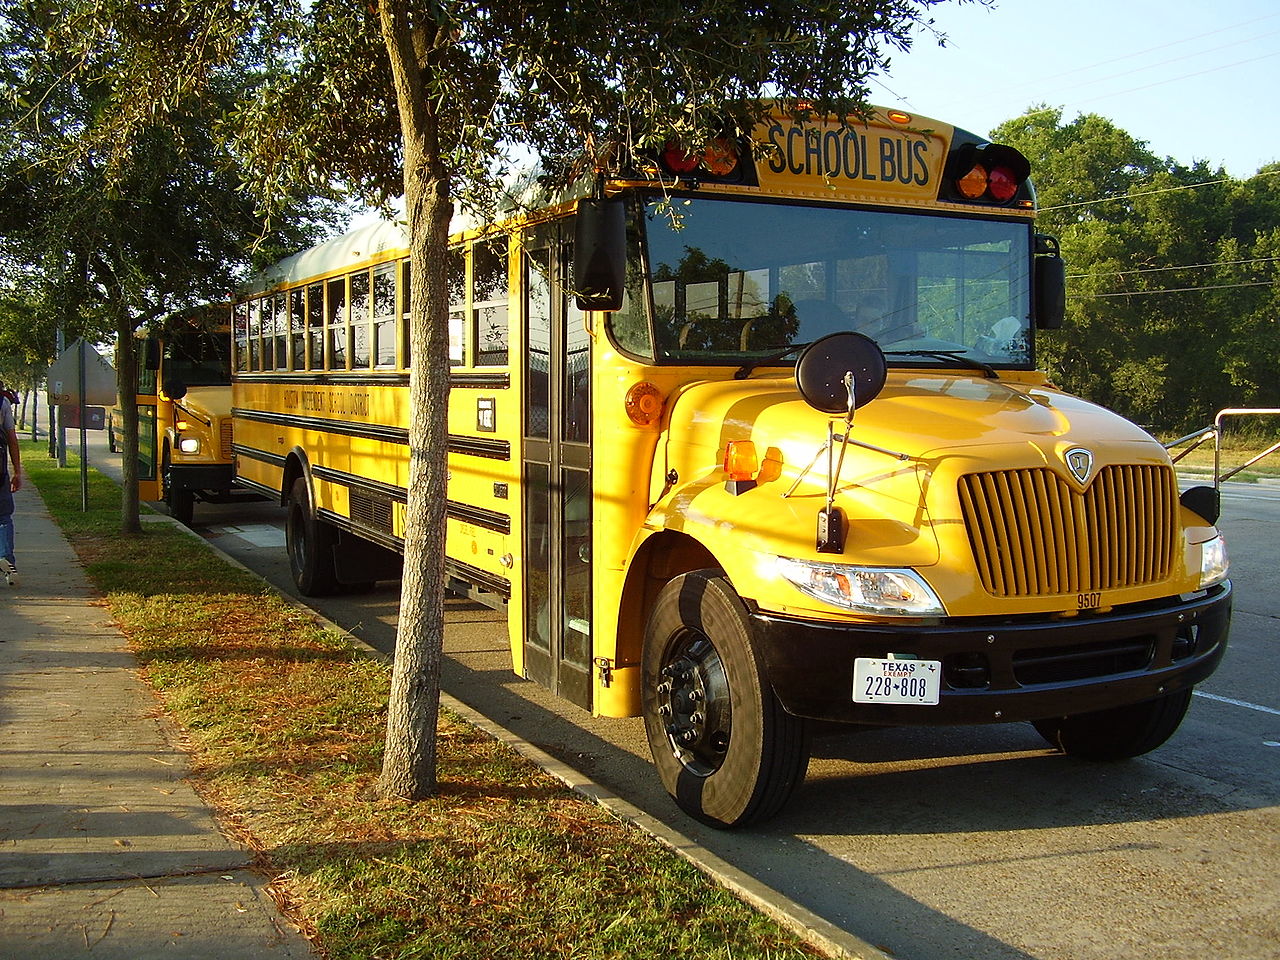 A Houston ISD CE300 school bus